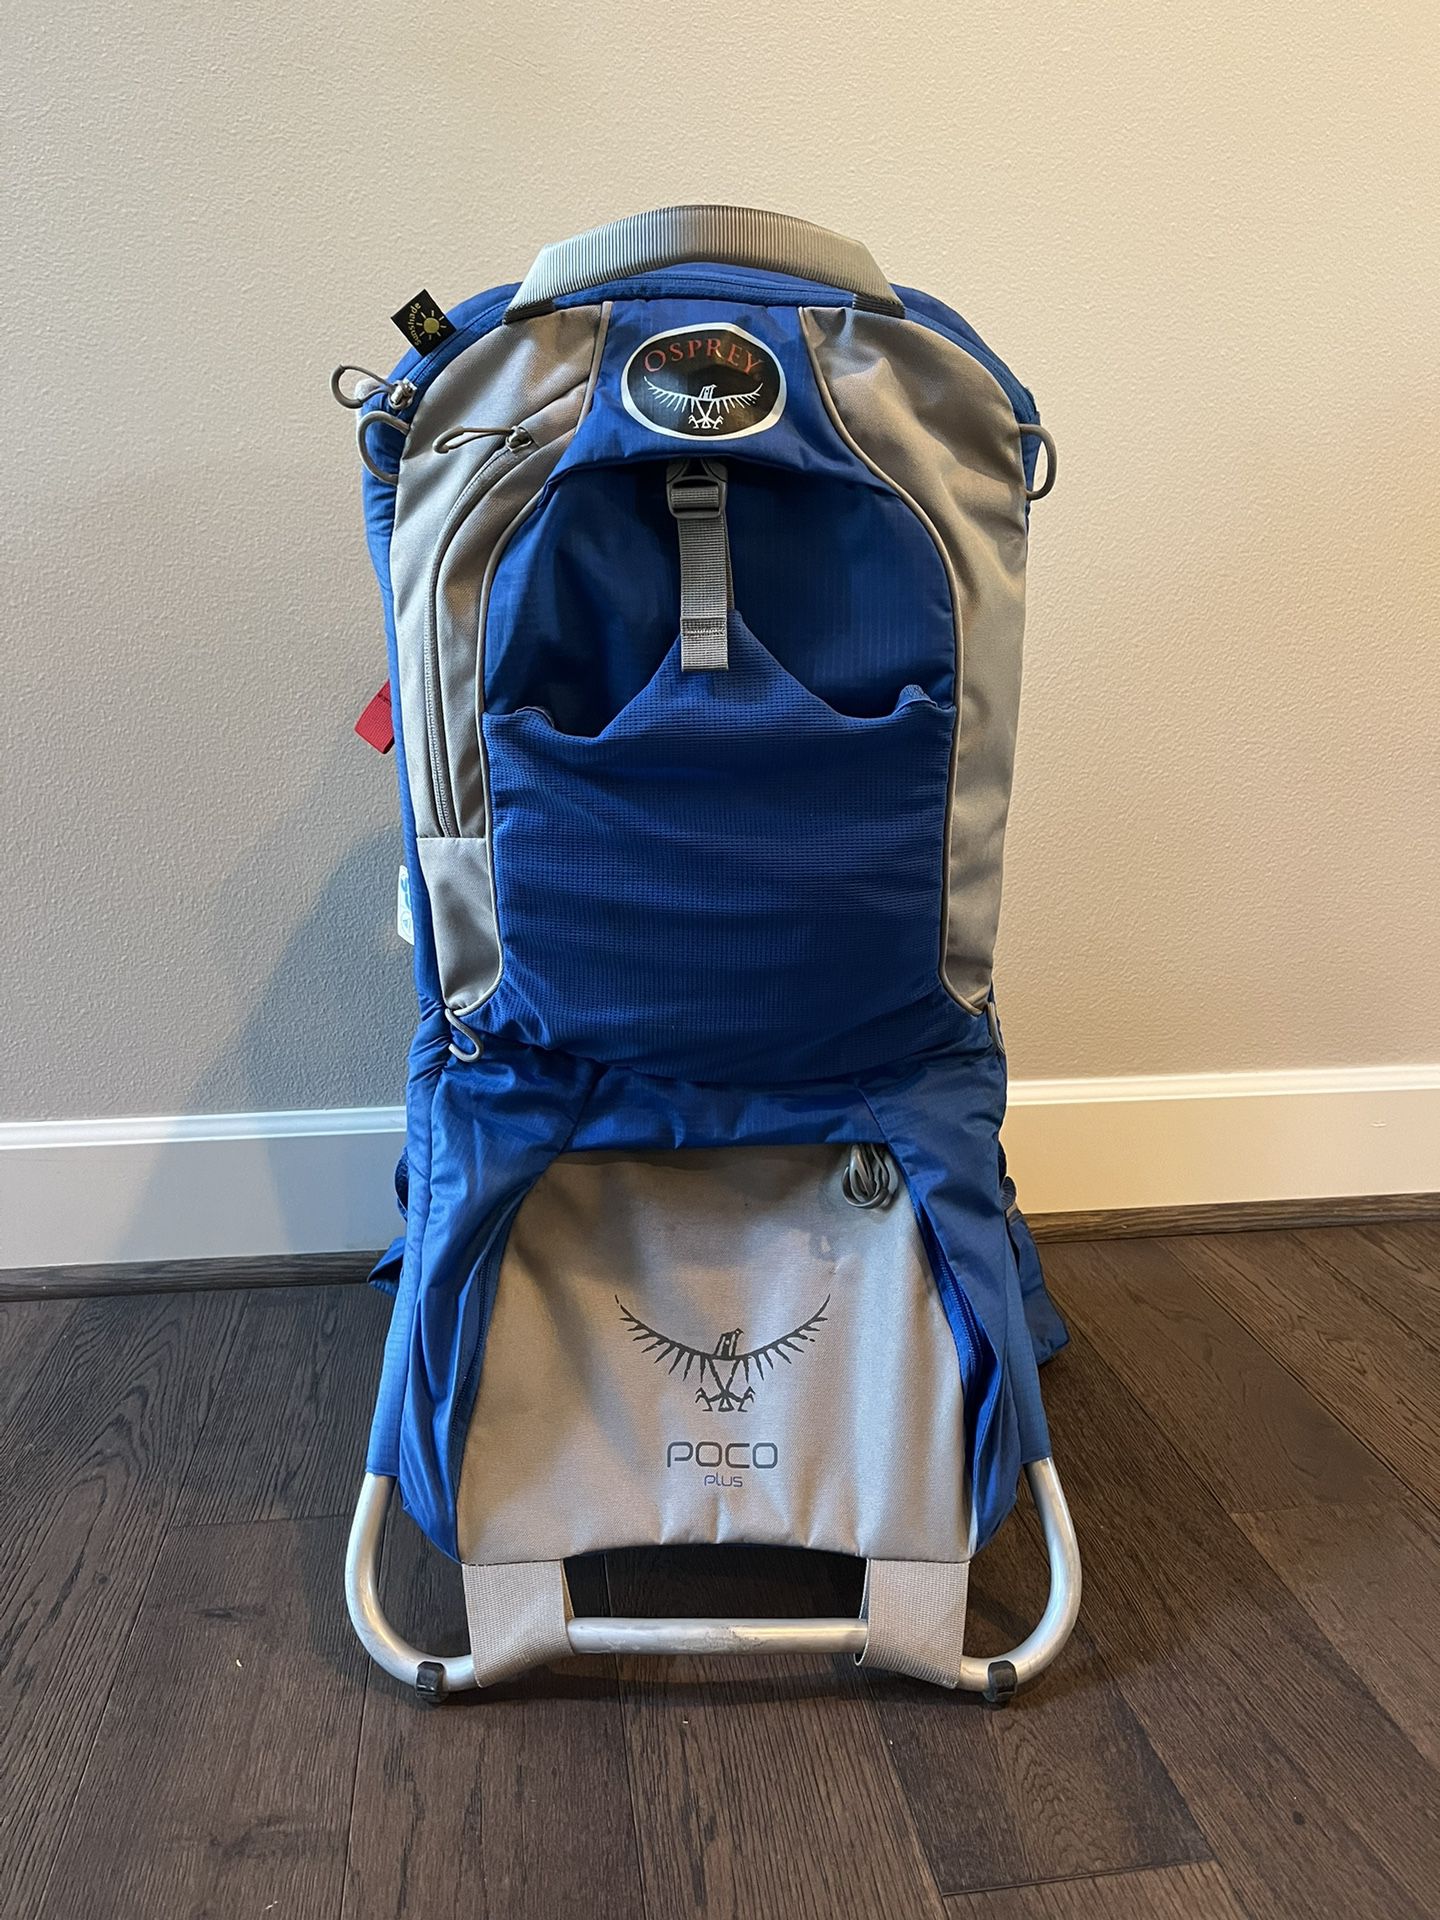 Osprey Poco Plus Child Carrier / Hiking Backpack